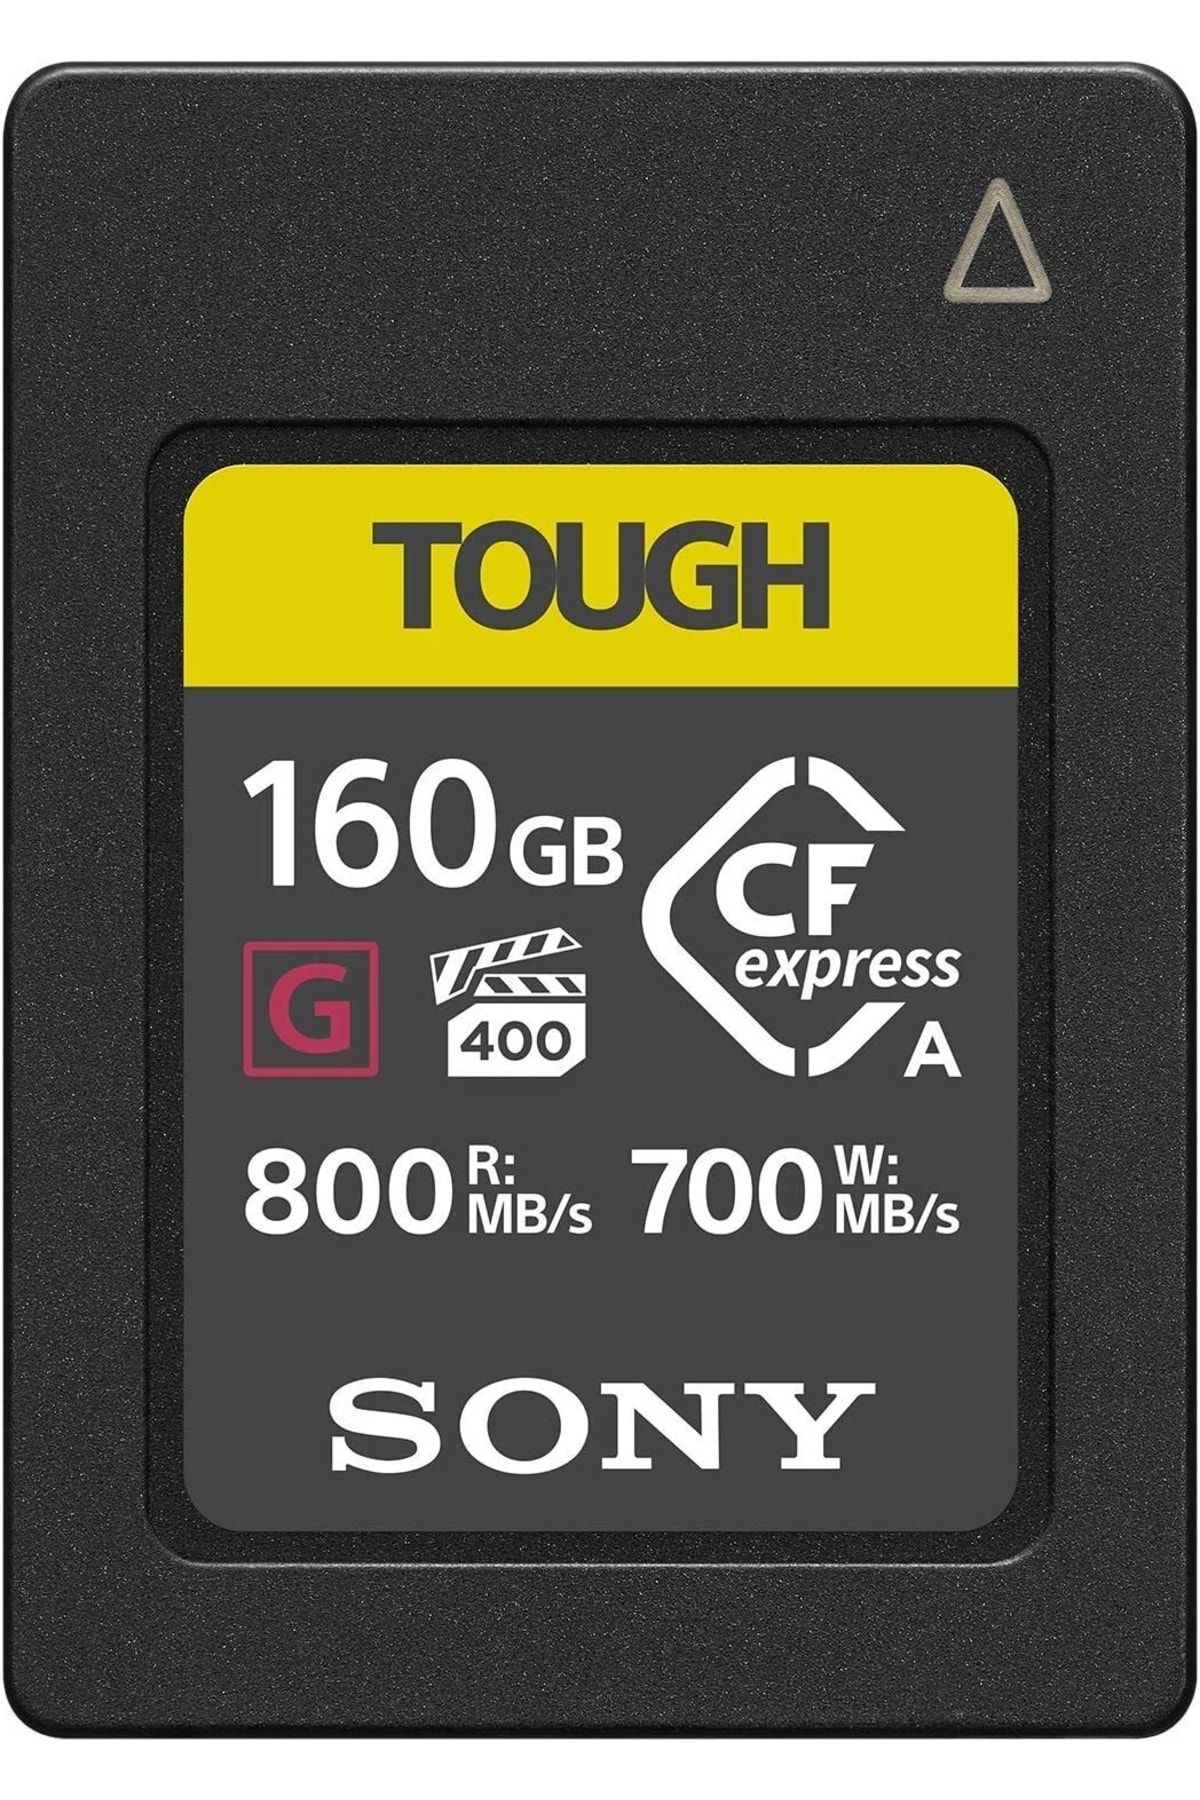 Sony Cea-g160t Compact Flash Express Bellek Kartı (160 Gb, Tip A, 800 Mb/s Okuma, 700 Mb/s Yazma)